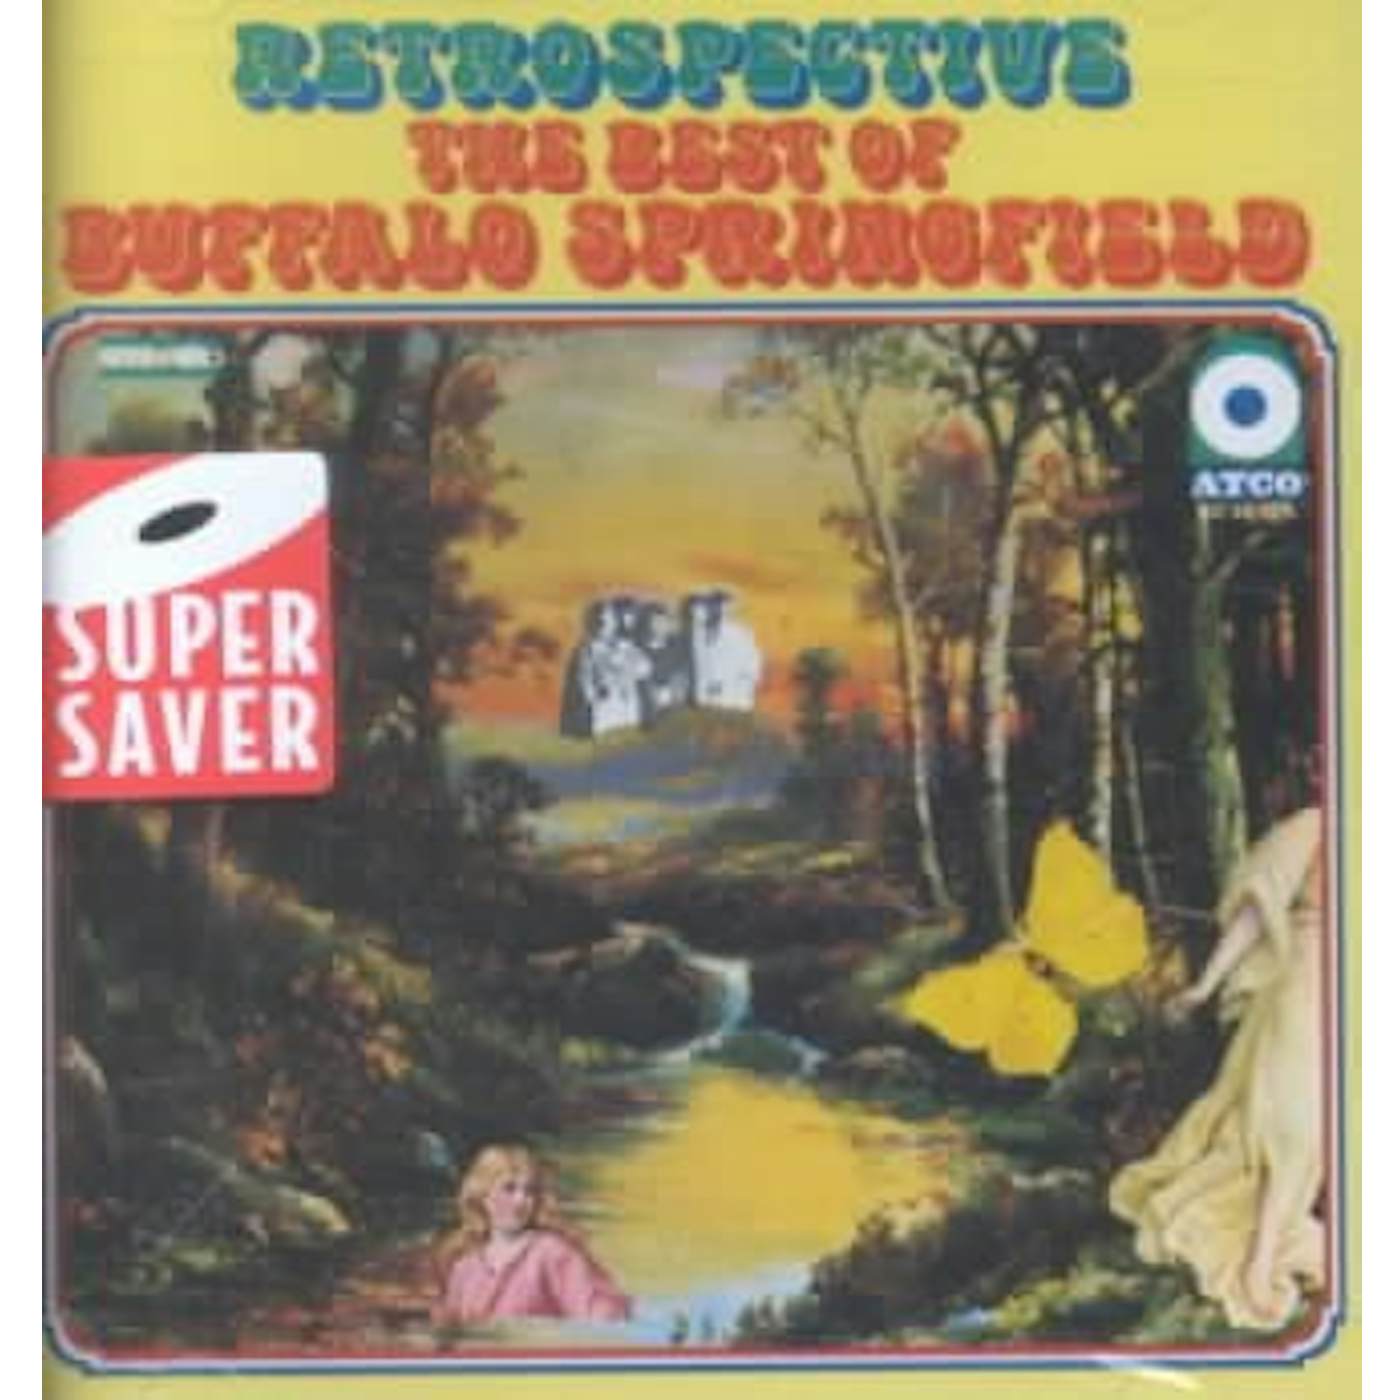 Retrospective: The Best of Buffalo Springfield CD